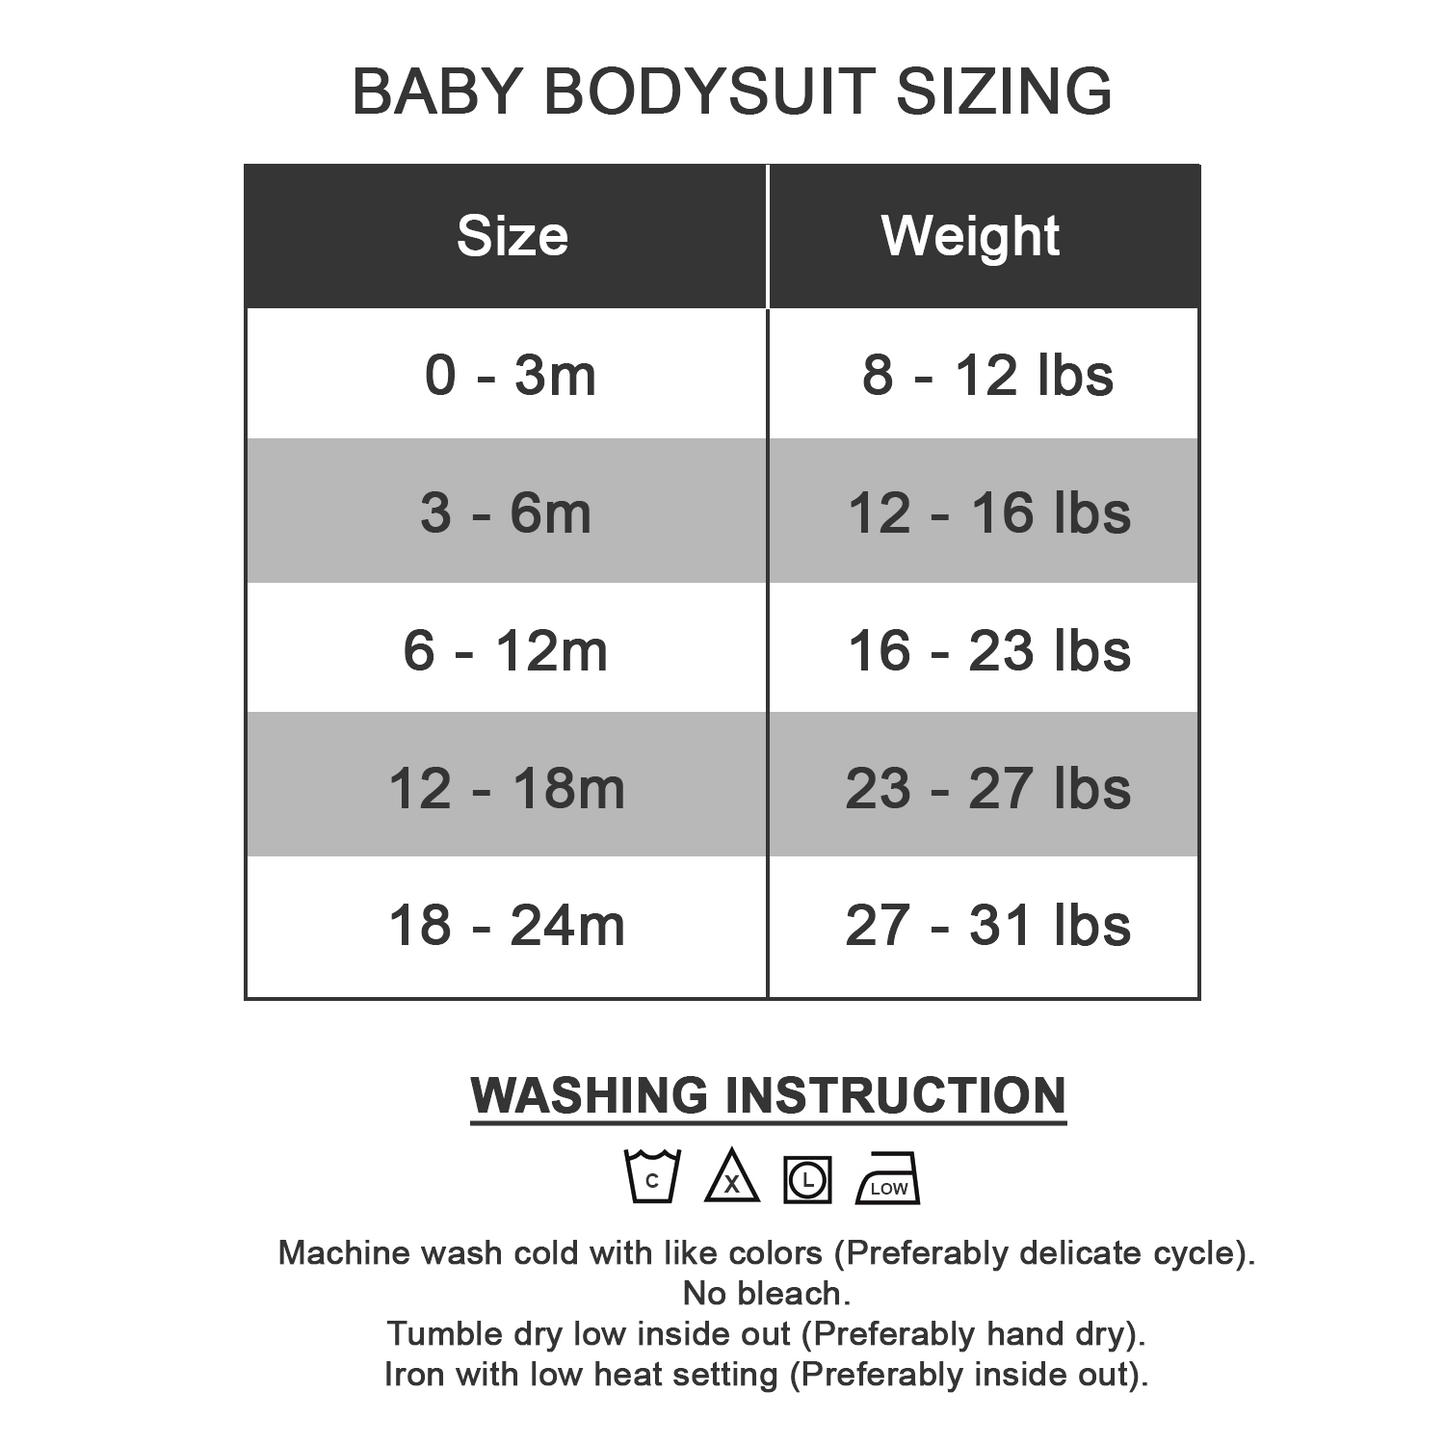 Endanzoo Organic Baby Bodysuit - Beautiful Canada